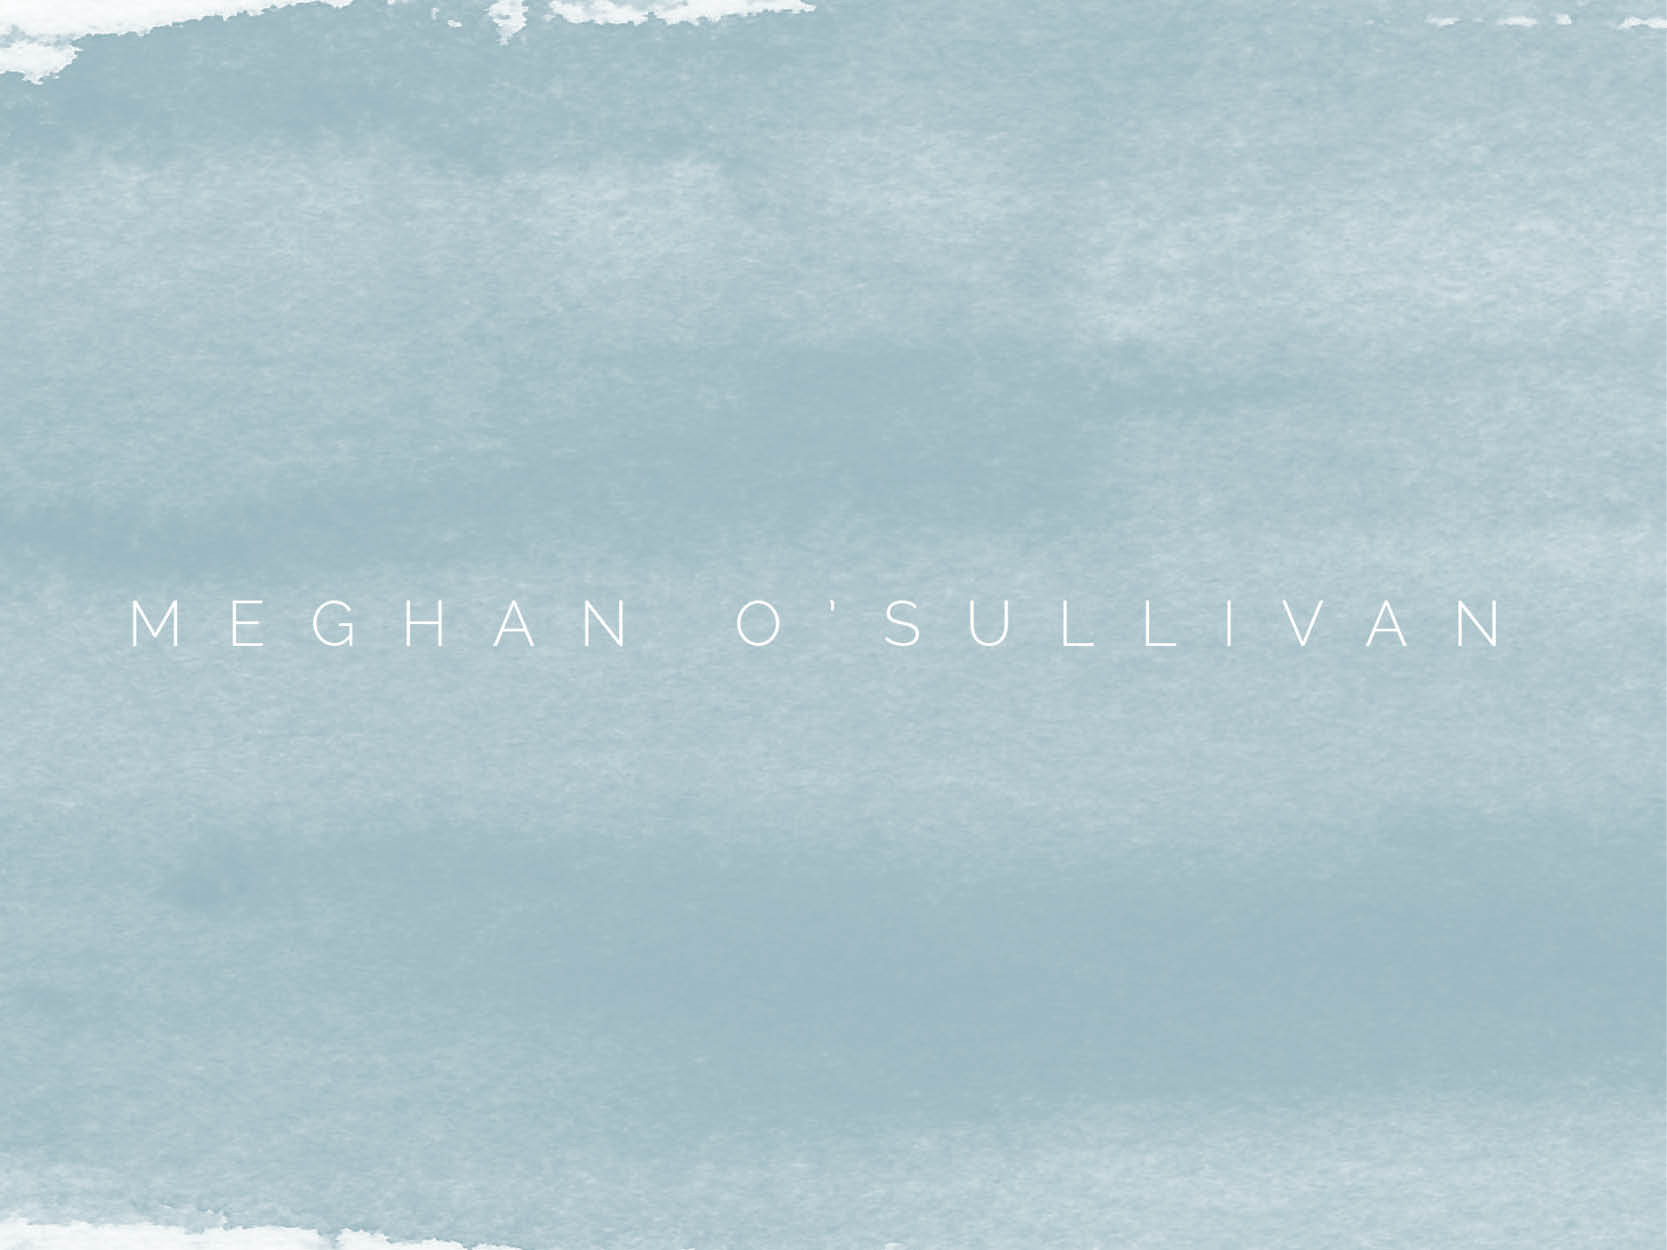 Meghan O'Sullivan Photography custom Squarespace website design by Emma Rose Company.  #squarespace #photographer #beautifulbranding